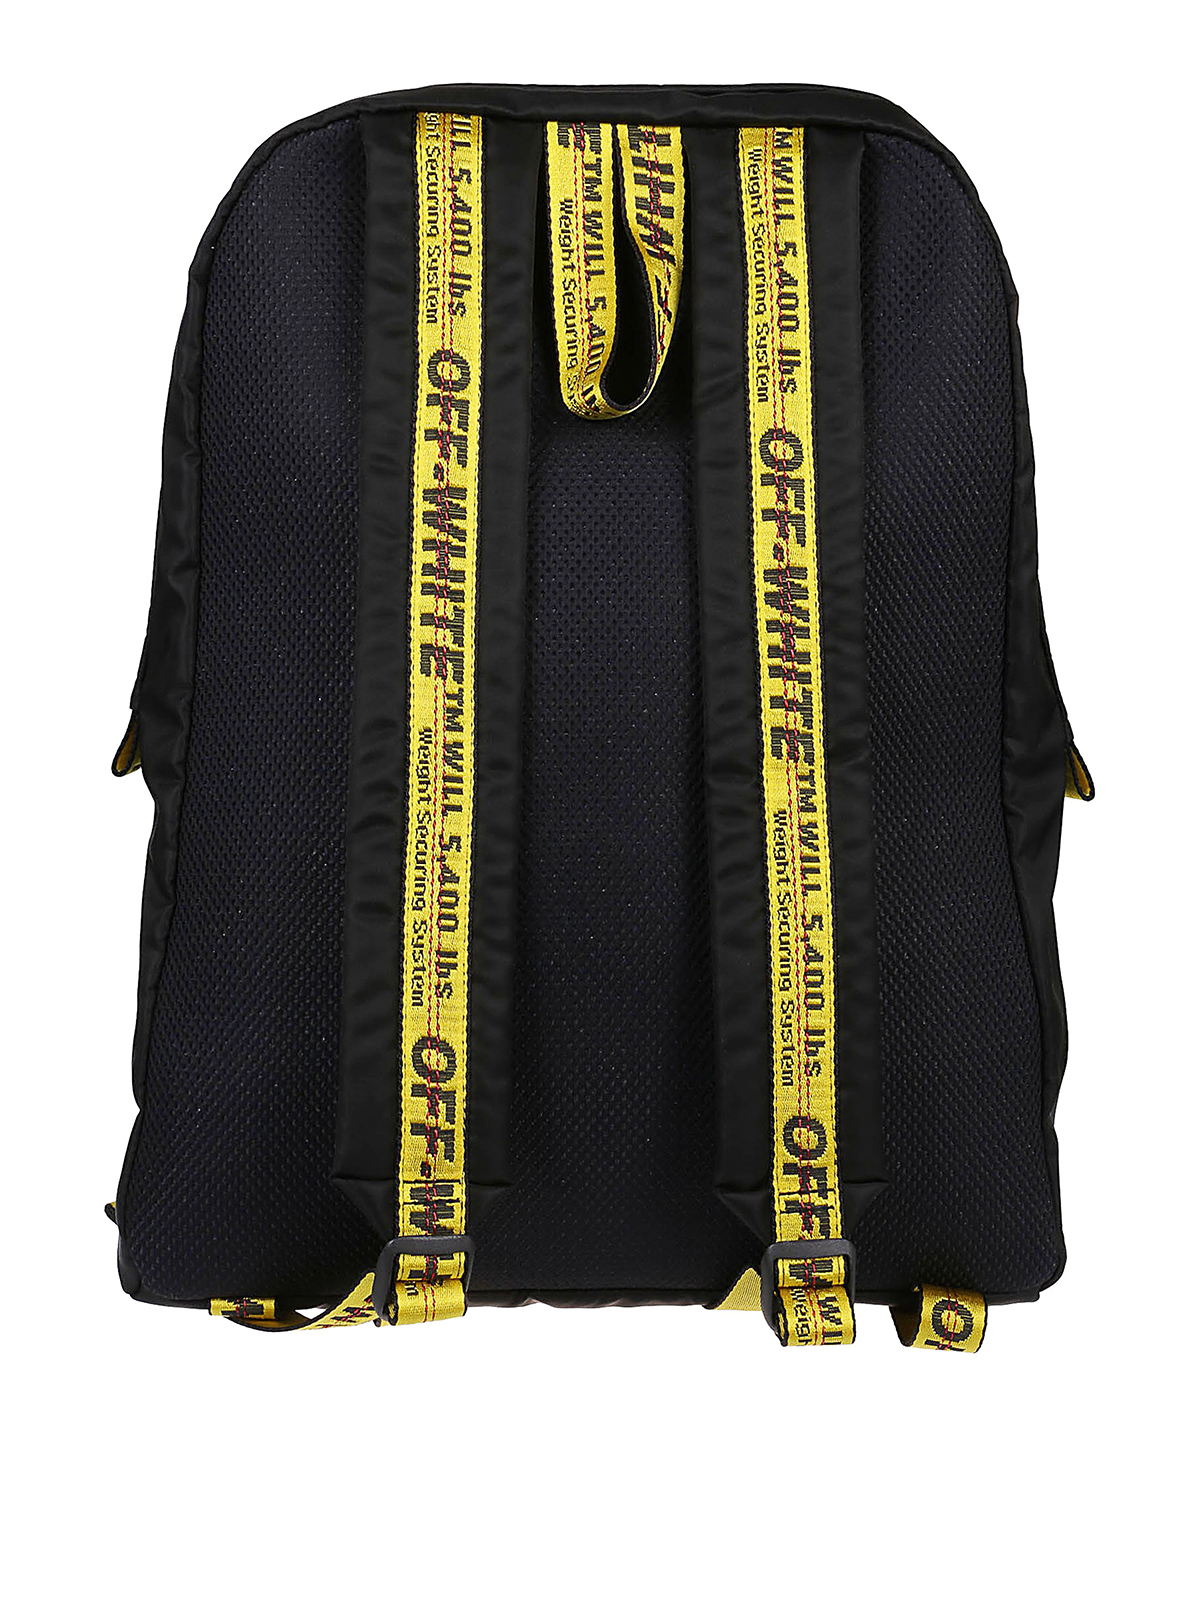 Backpacks Off-White Caravaggio Arrows print backpack - OMNB019R21FAB0021025